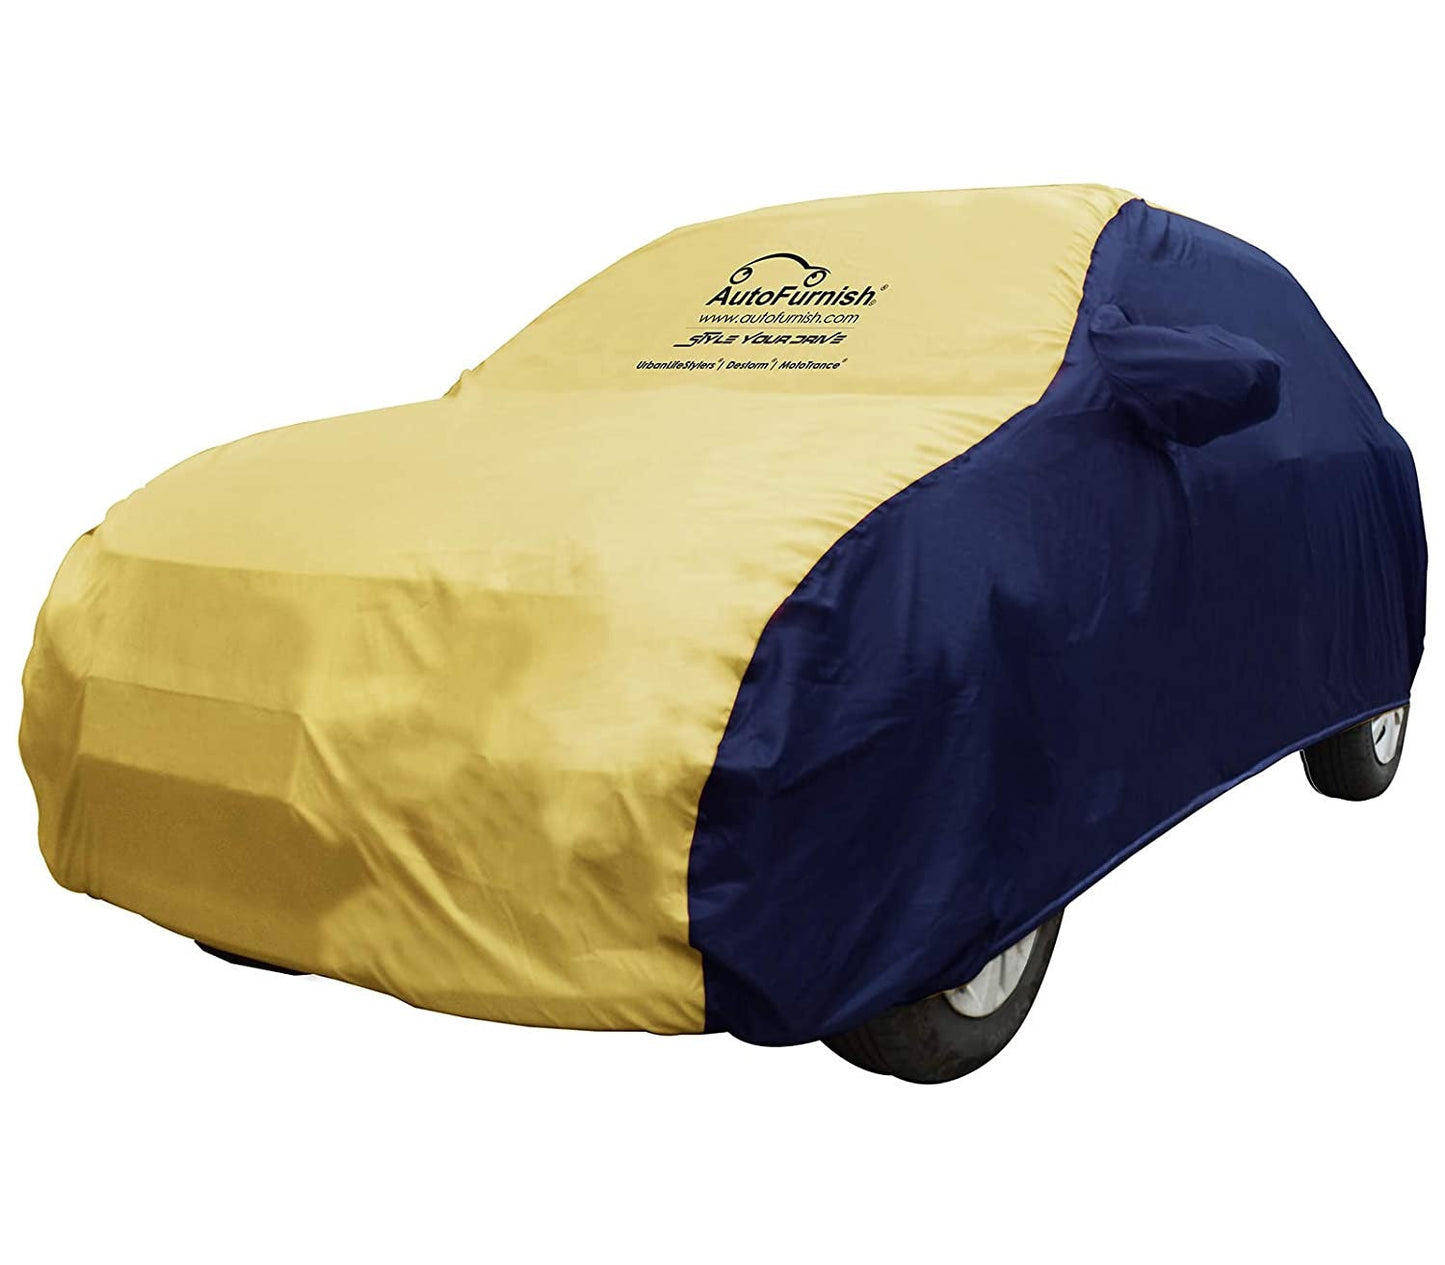 Maruti Suzuki Vitara Brezza (2020) Car Body Cover, Triple Stitched, Heat & Water Resistant with Side Mirror Pockets (SPORTY Series)